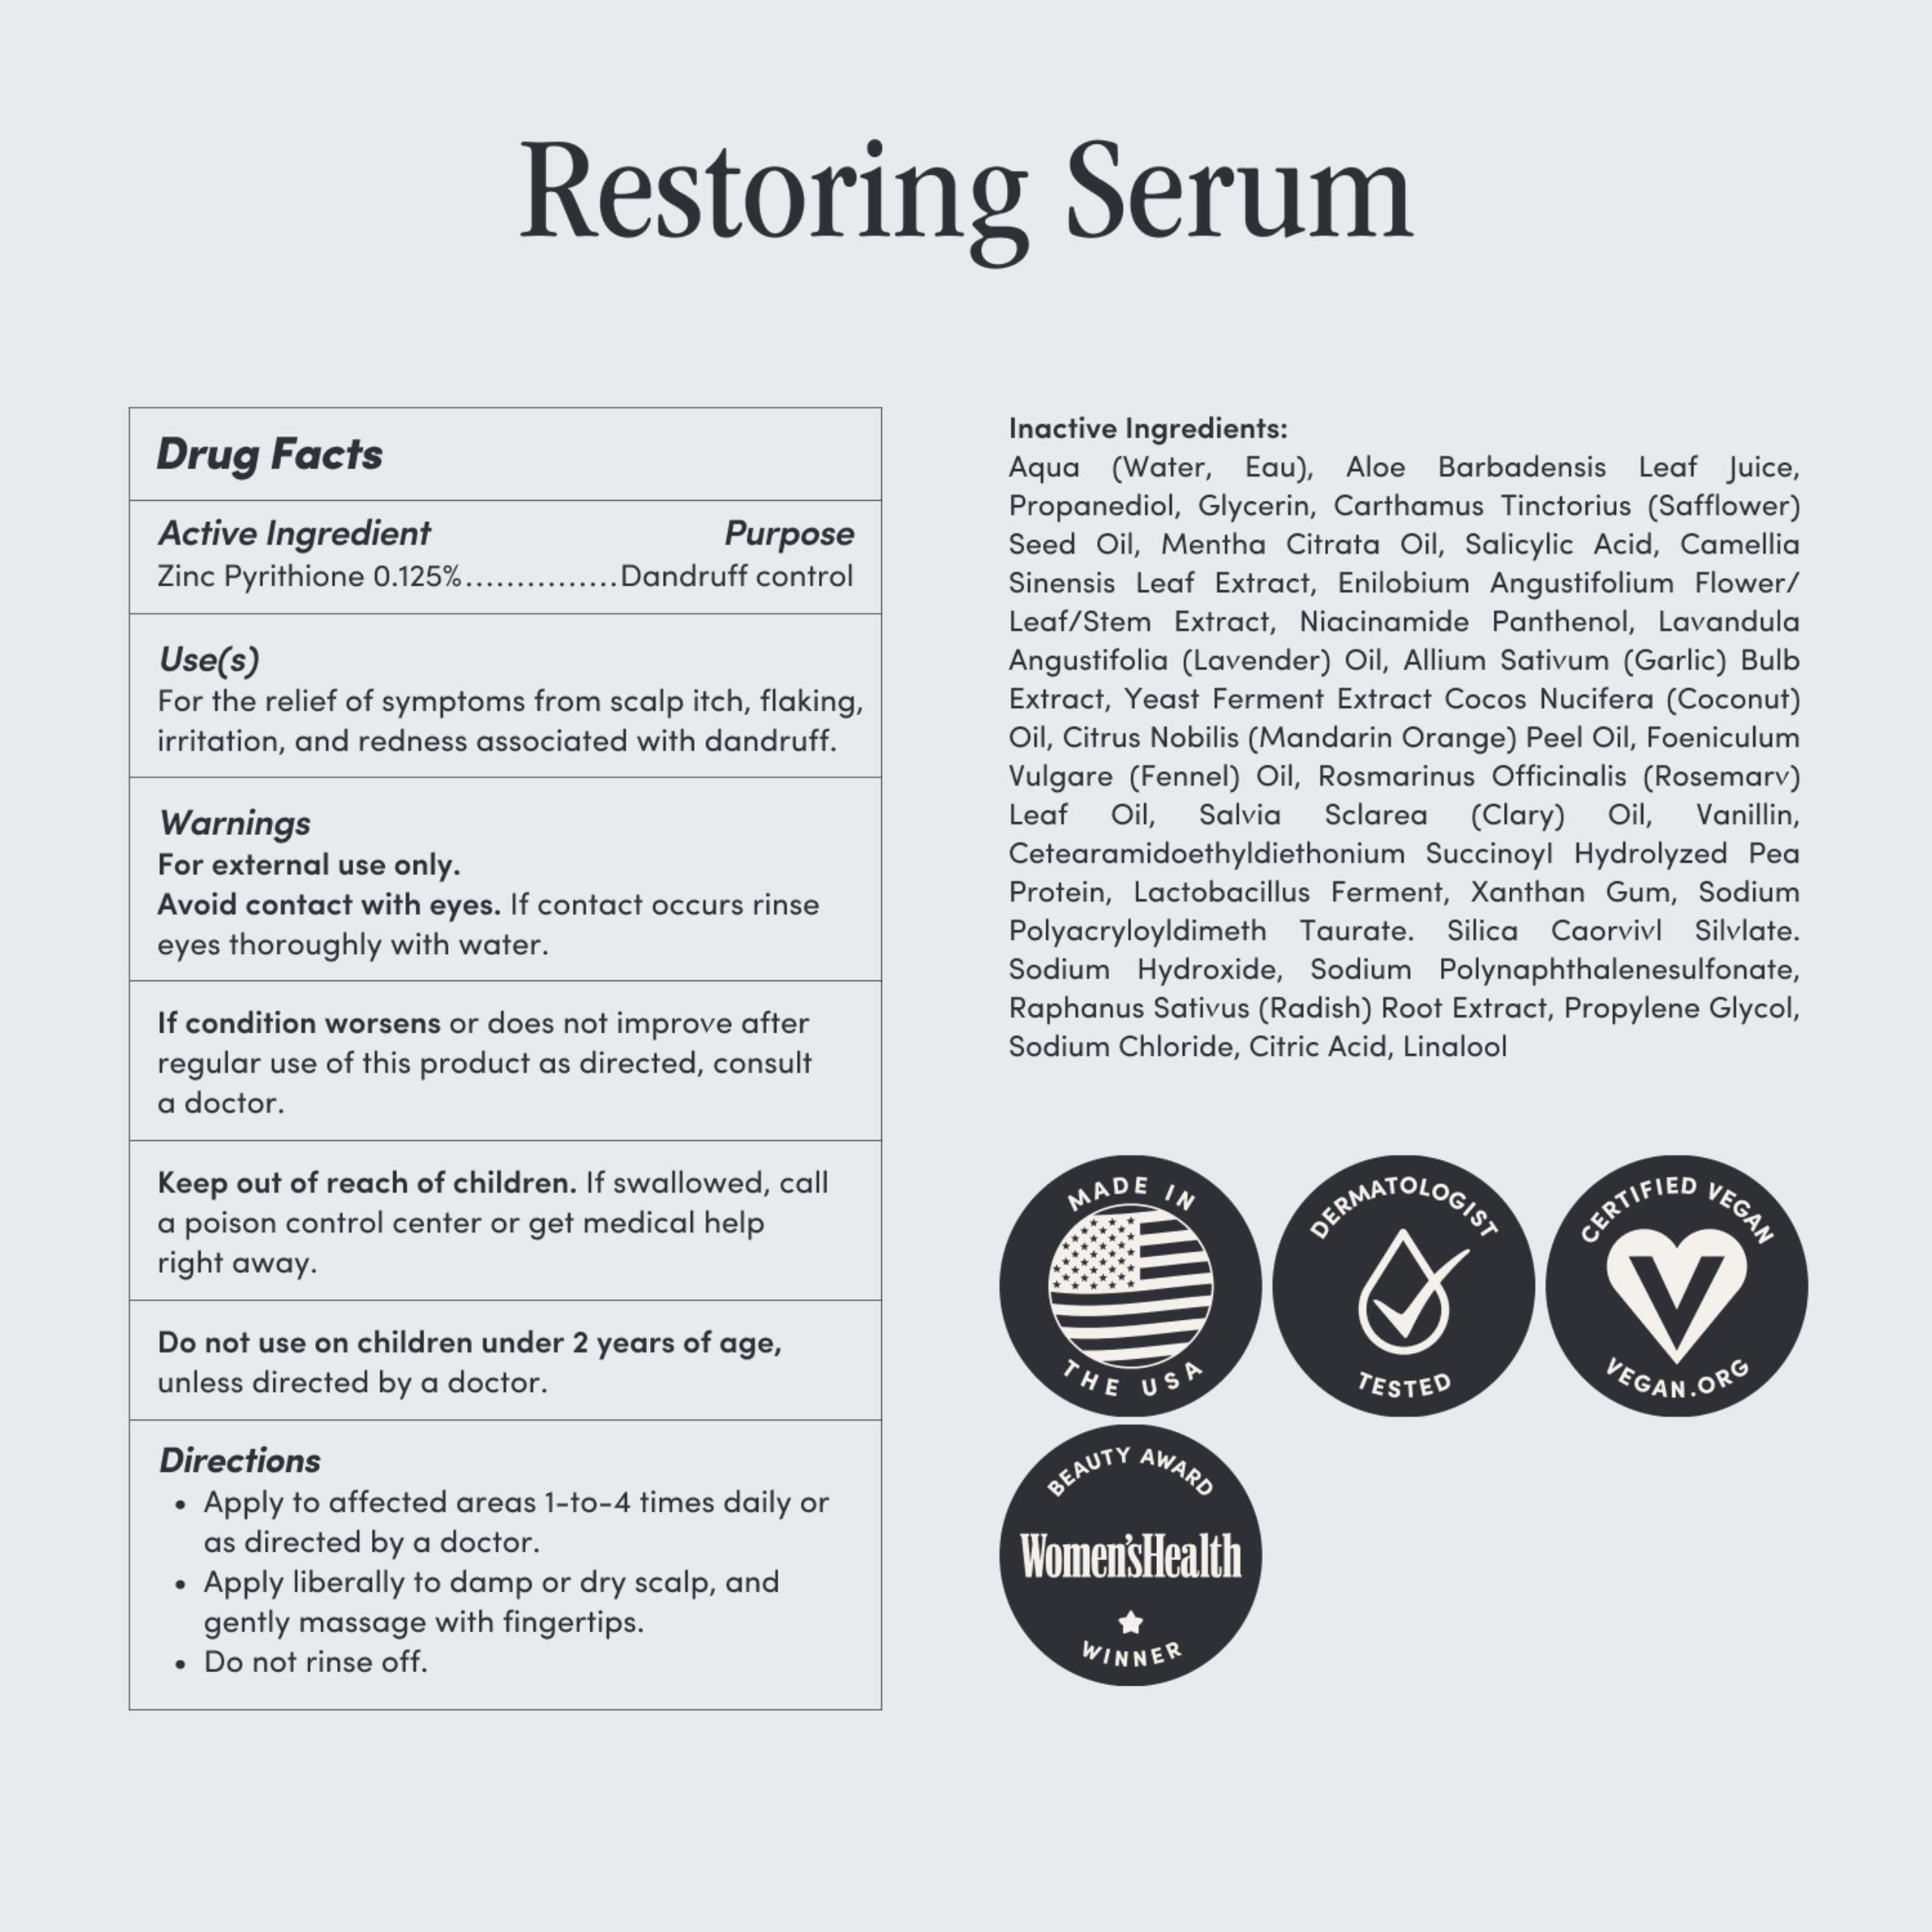 Restoring Serum